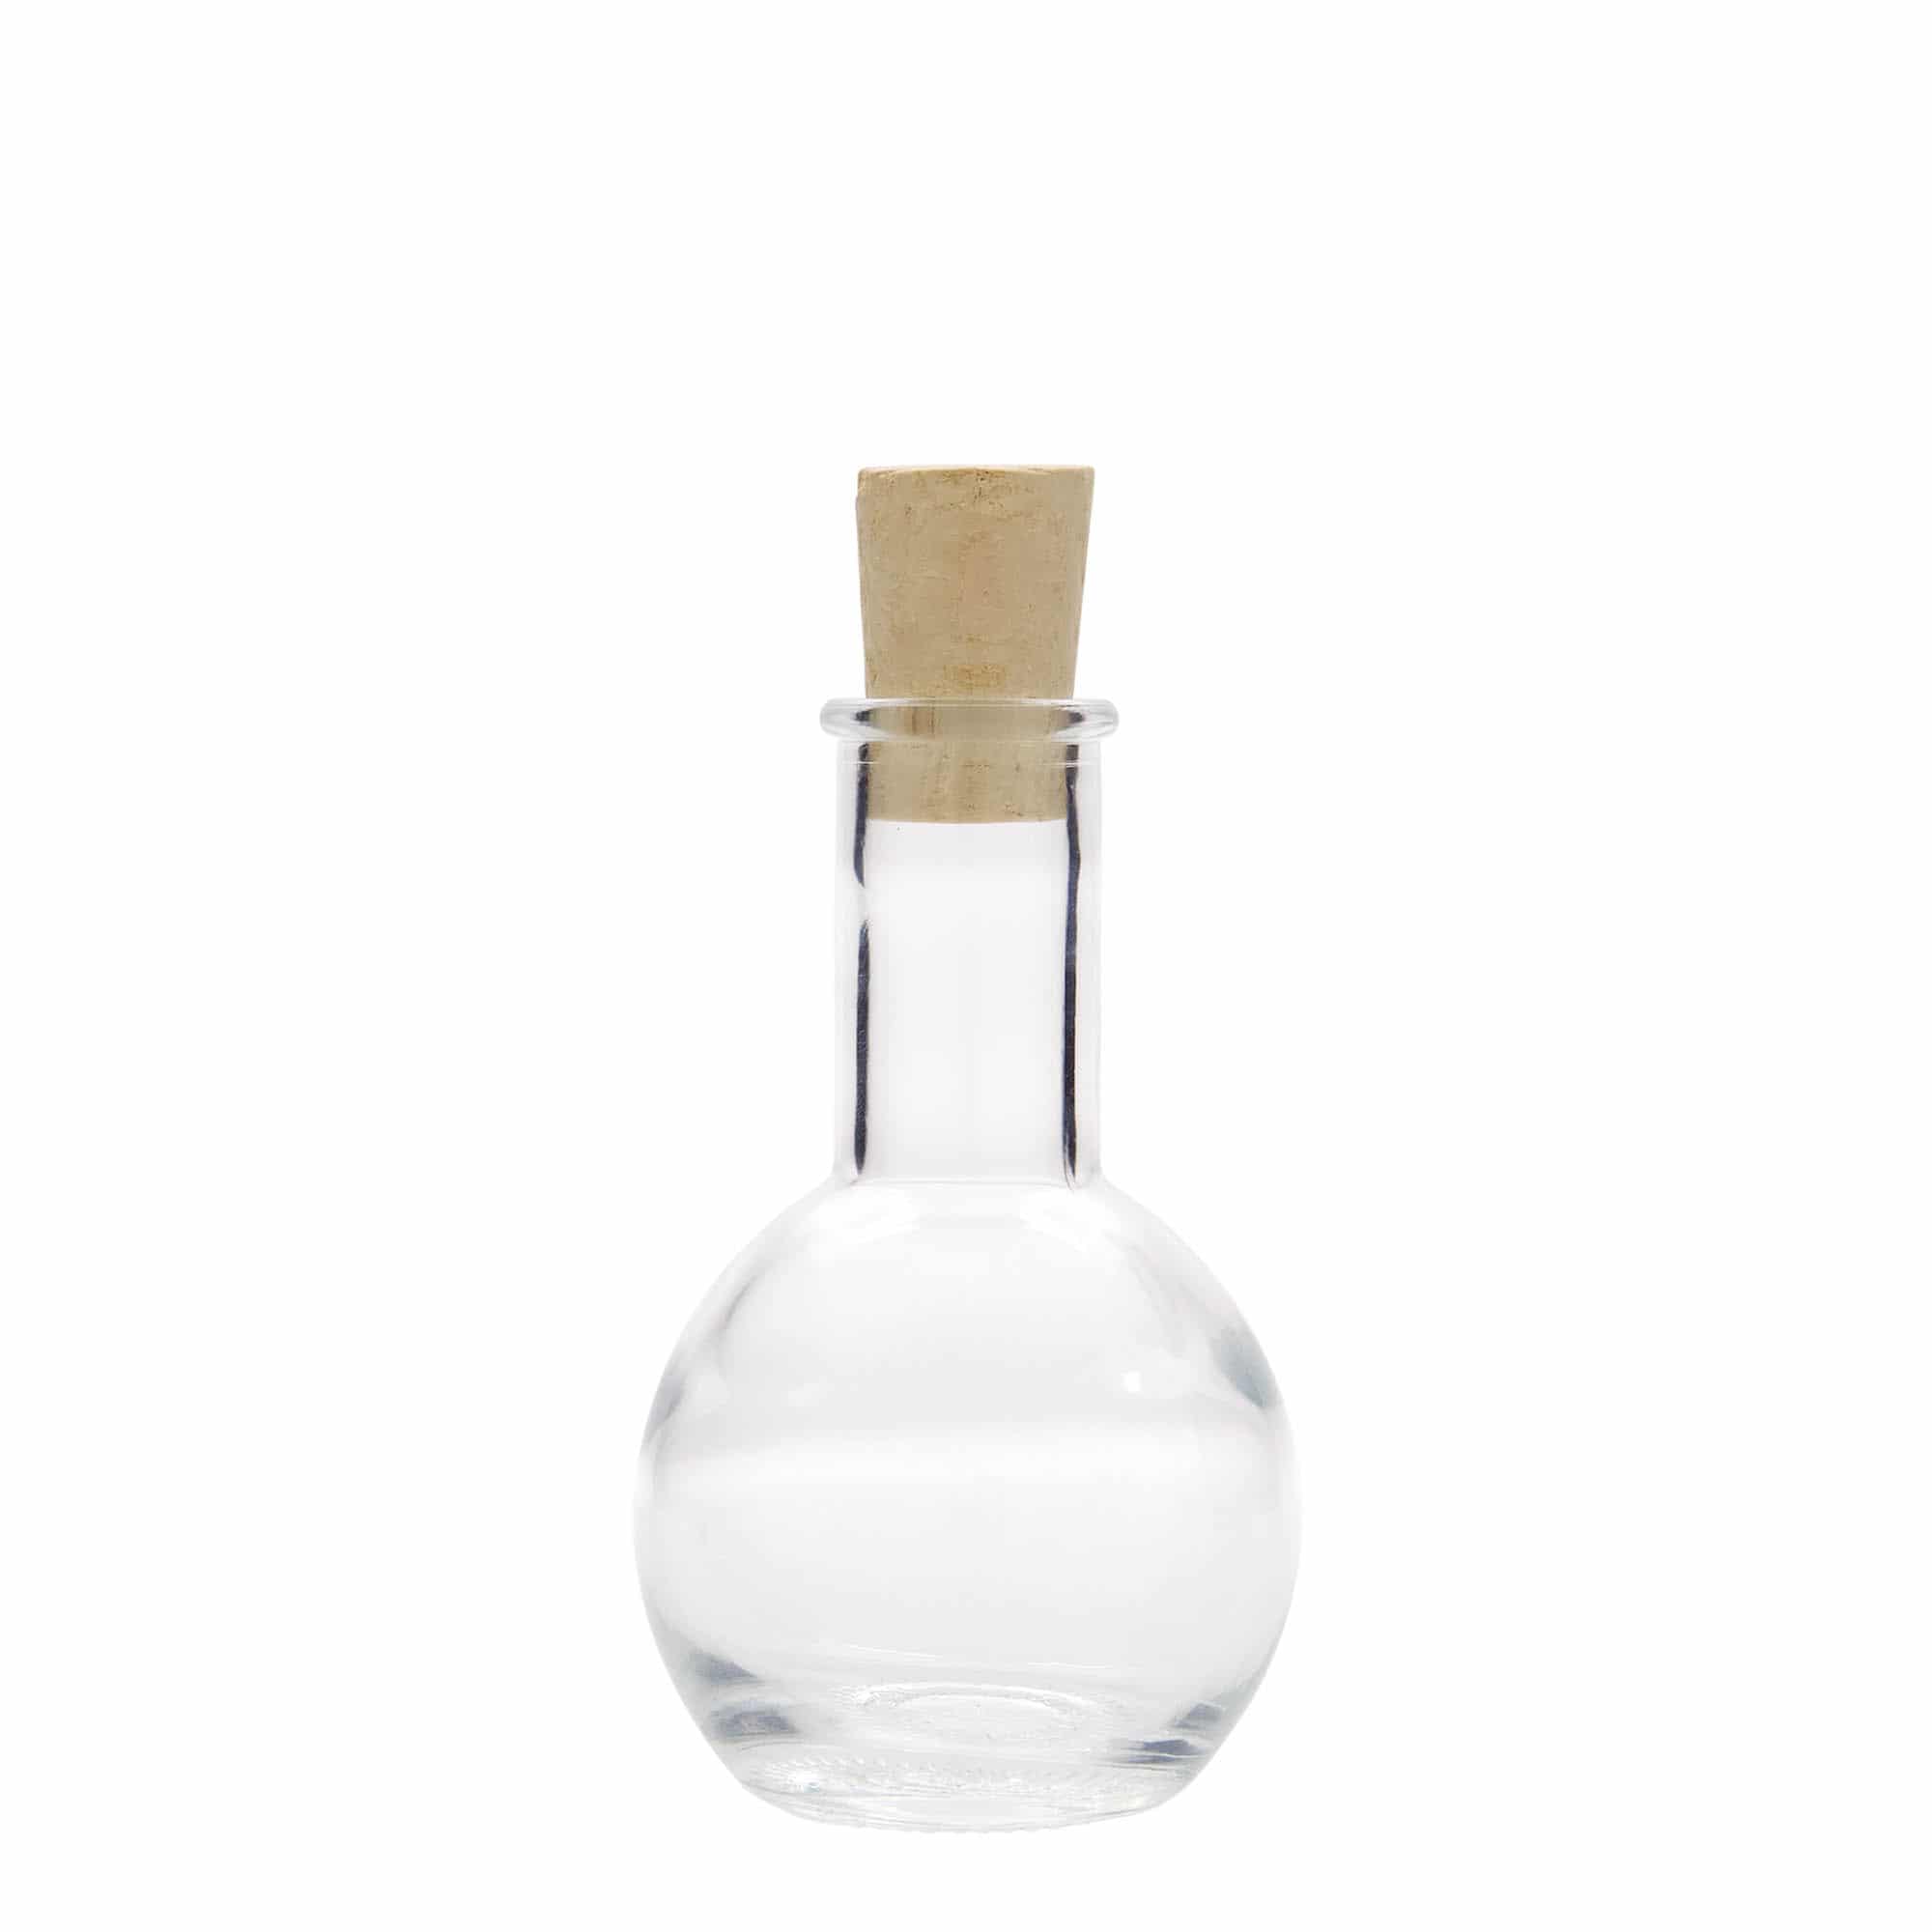 100 ml glass bottle 'Tulipano', closure: cork